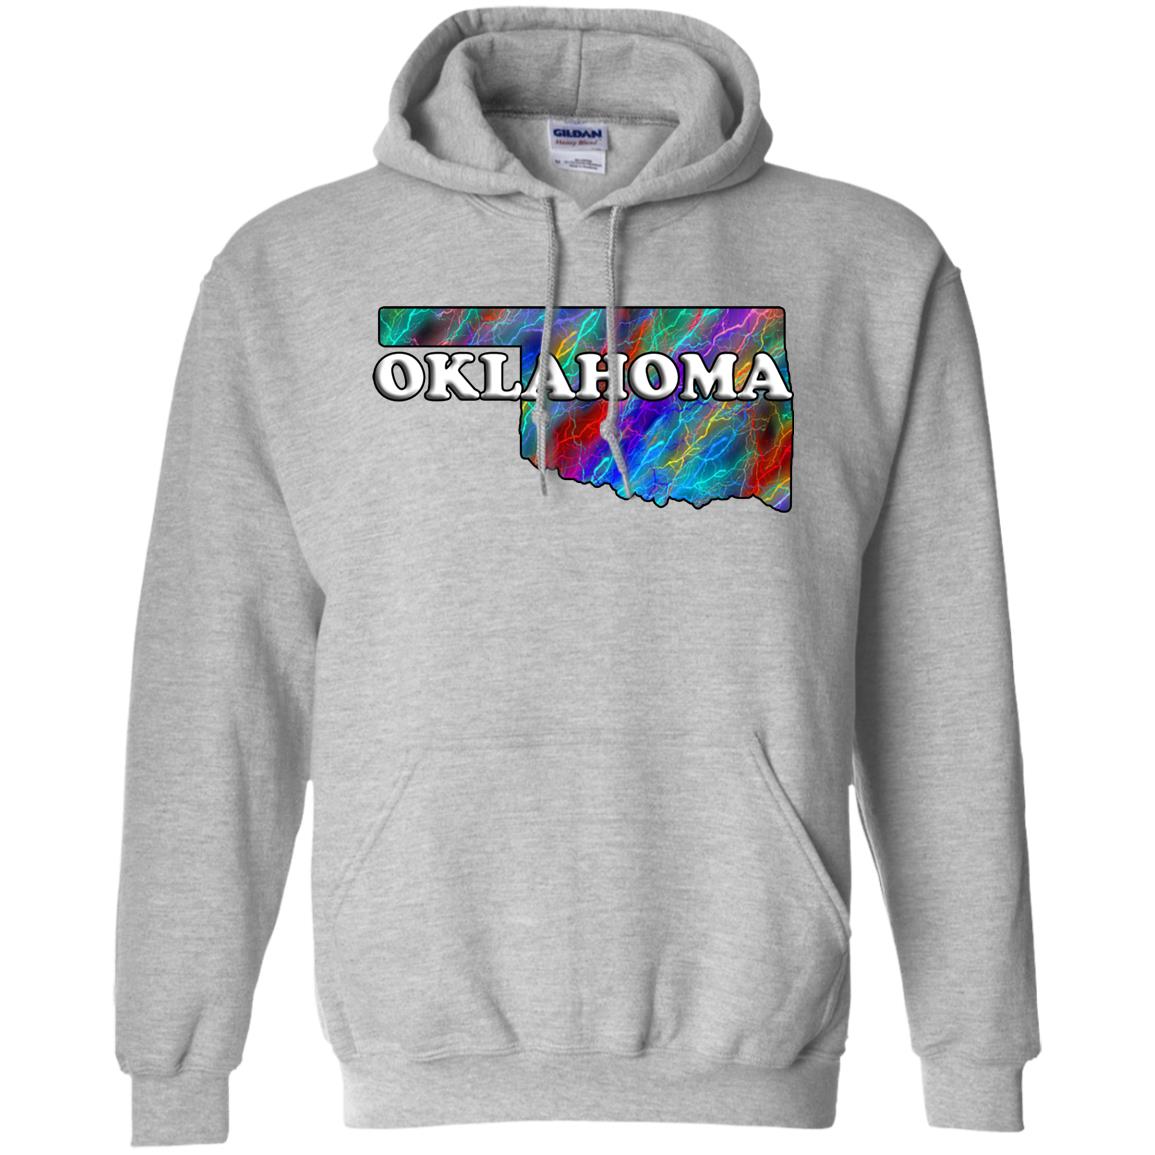 Oklahoma State Hoodie